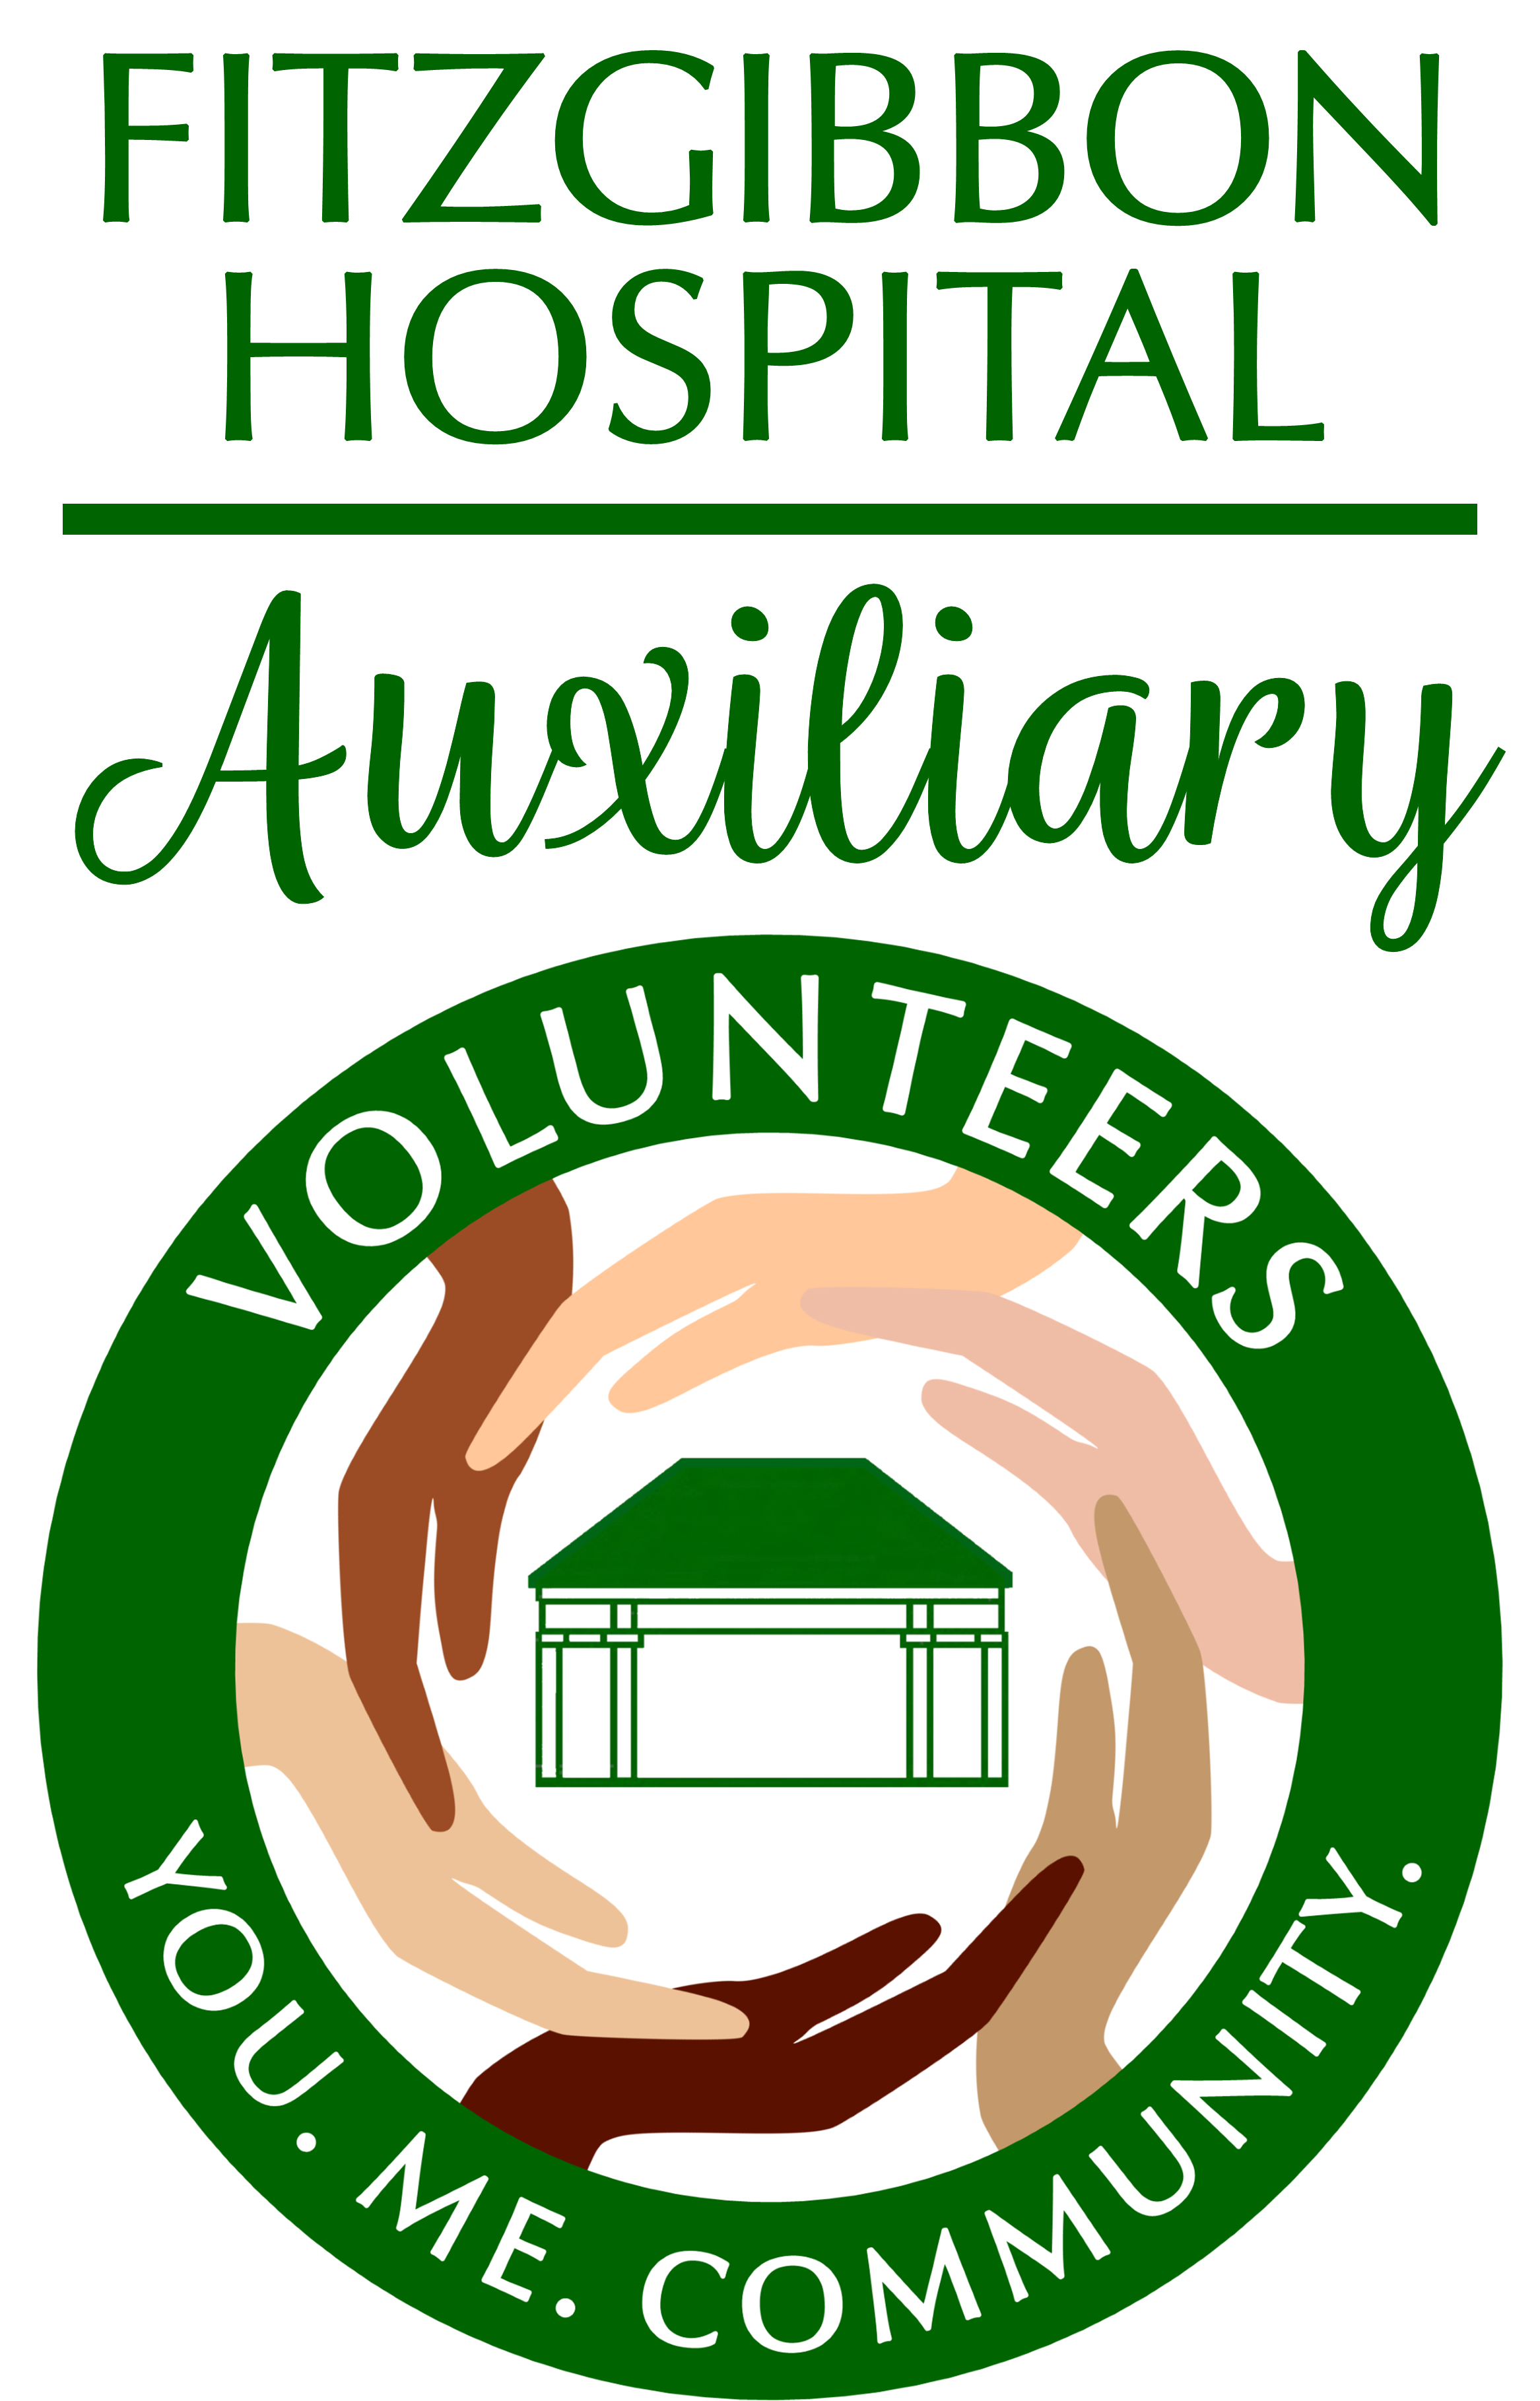 Fitzgibbon Hospital Auxiliary Ambassadors - Serving Fitzgibbon Hospital through a Community of Volunteers